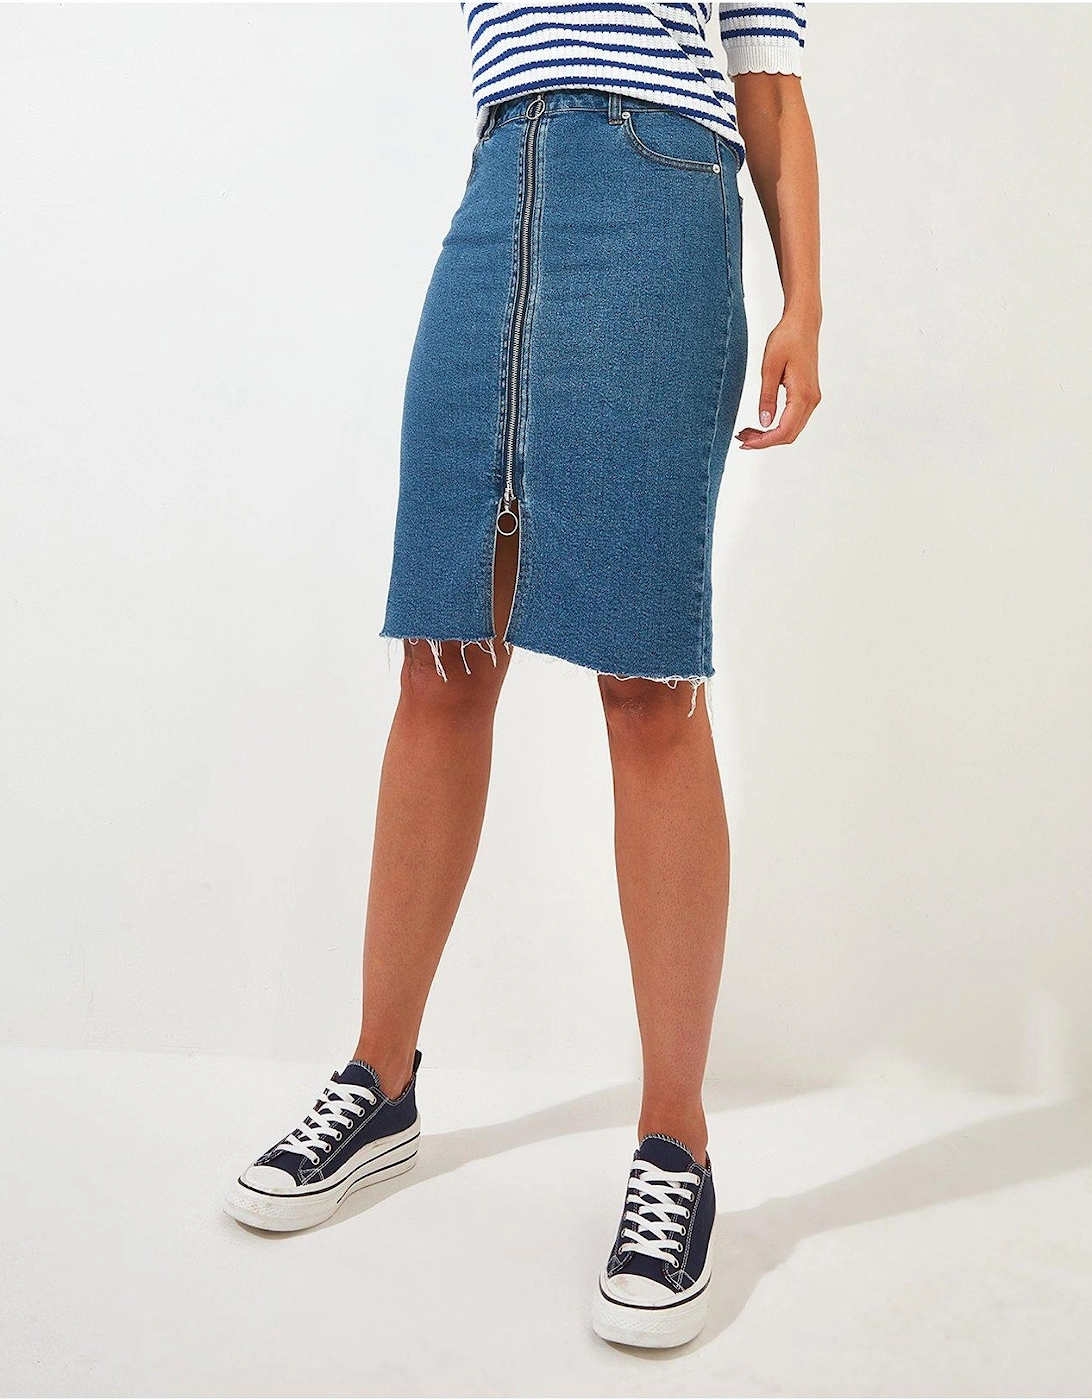 Zip Front Denim Skirt - Blue